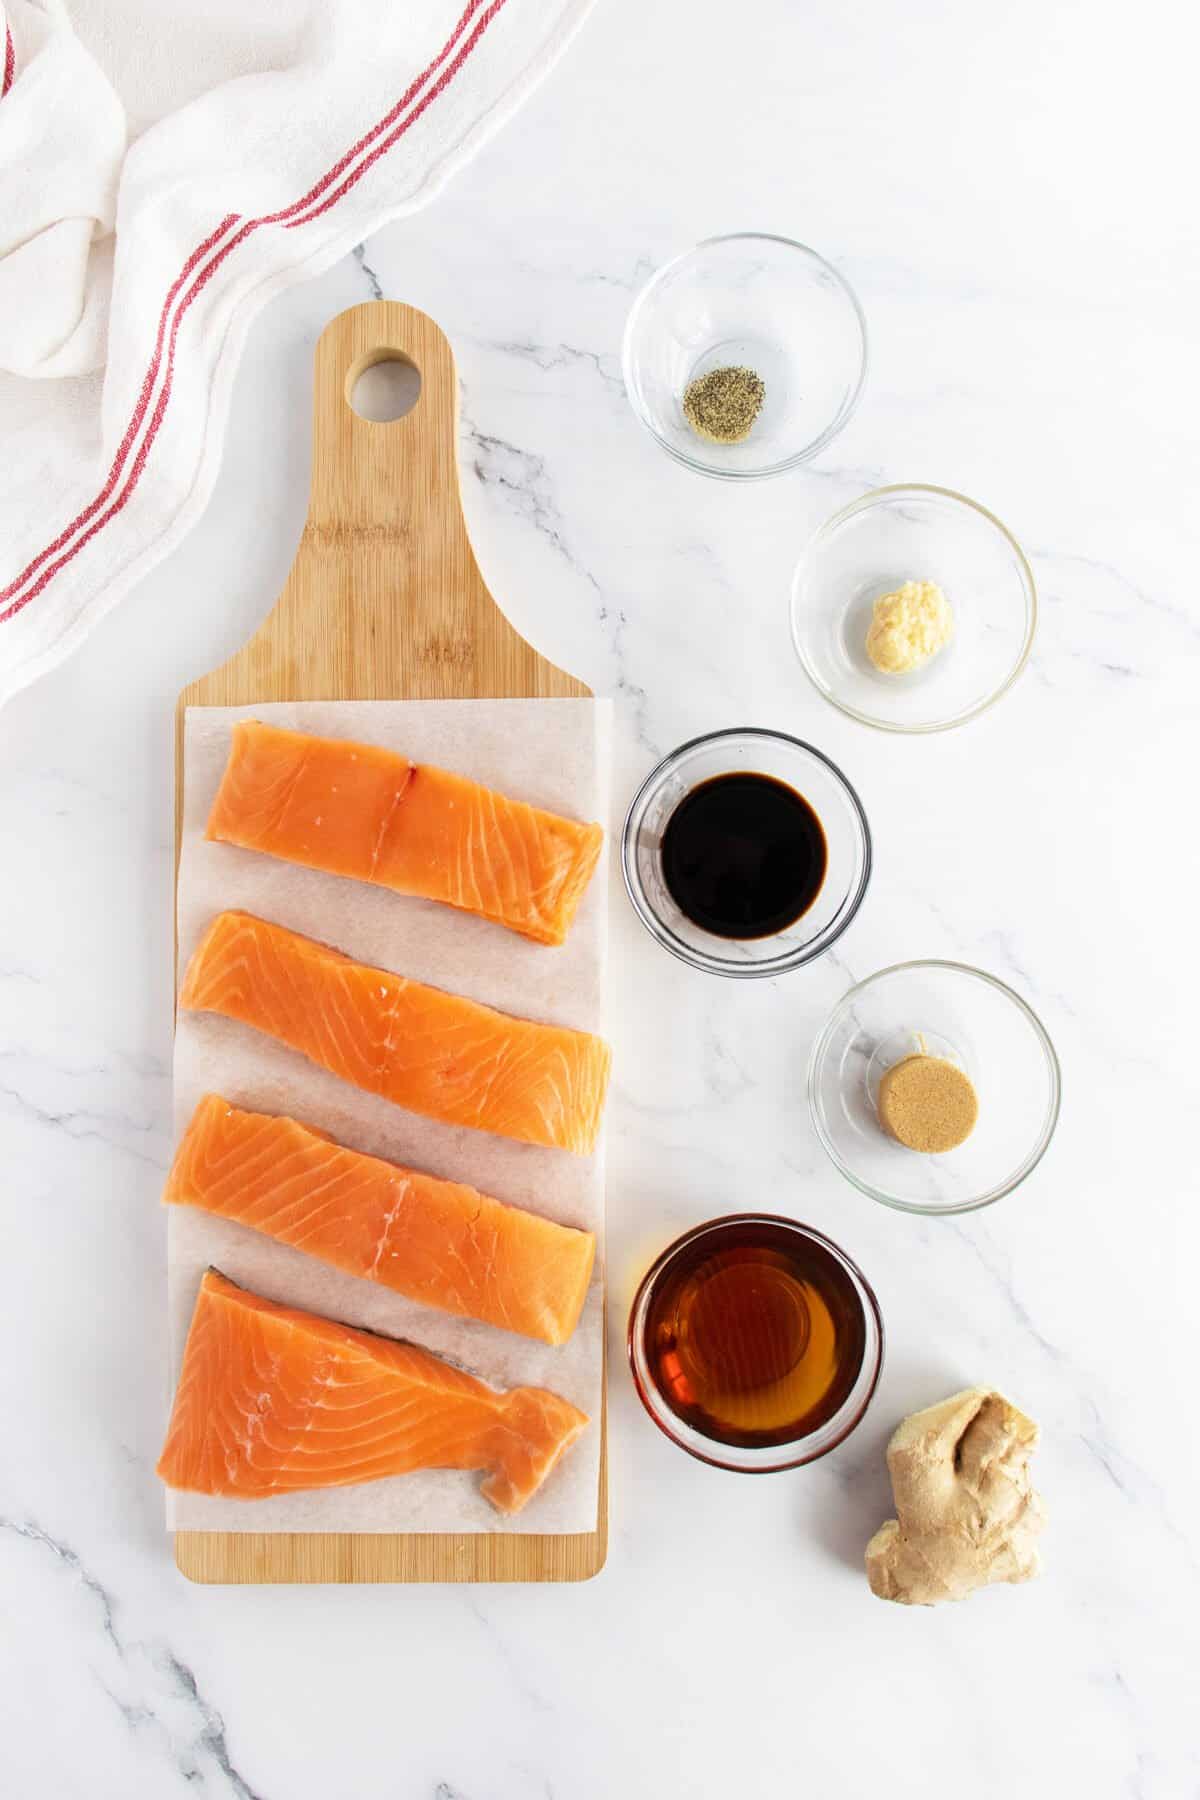 Maple Glazed Salmon ingredients